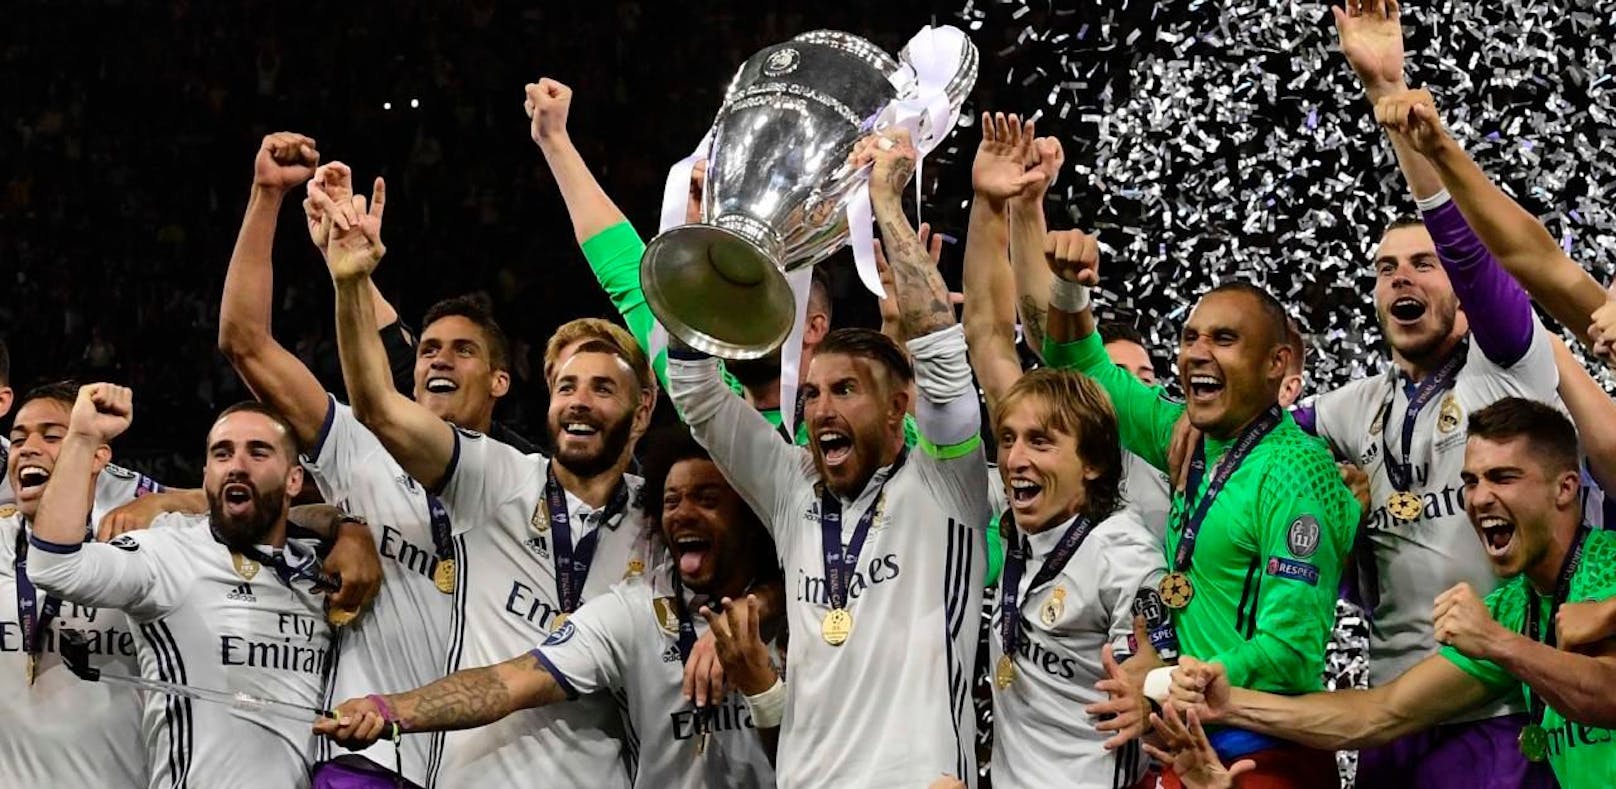 Real Madrid krönt sich zum Champions League-Sieger